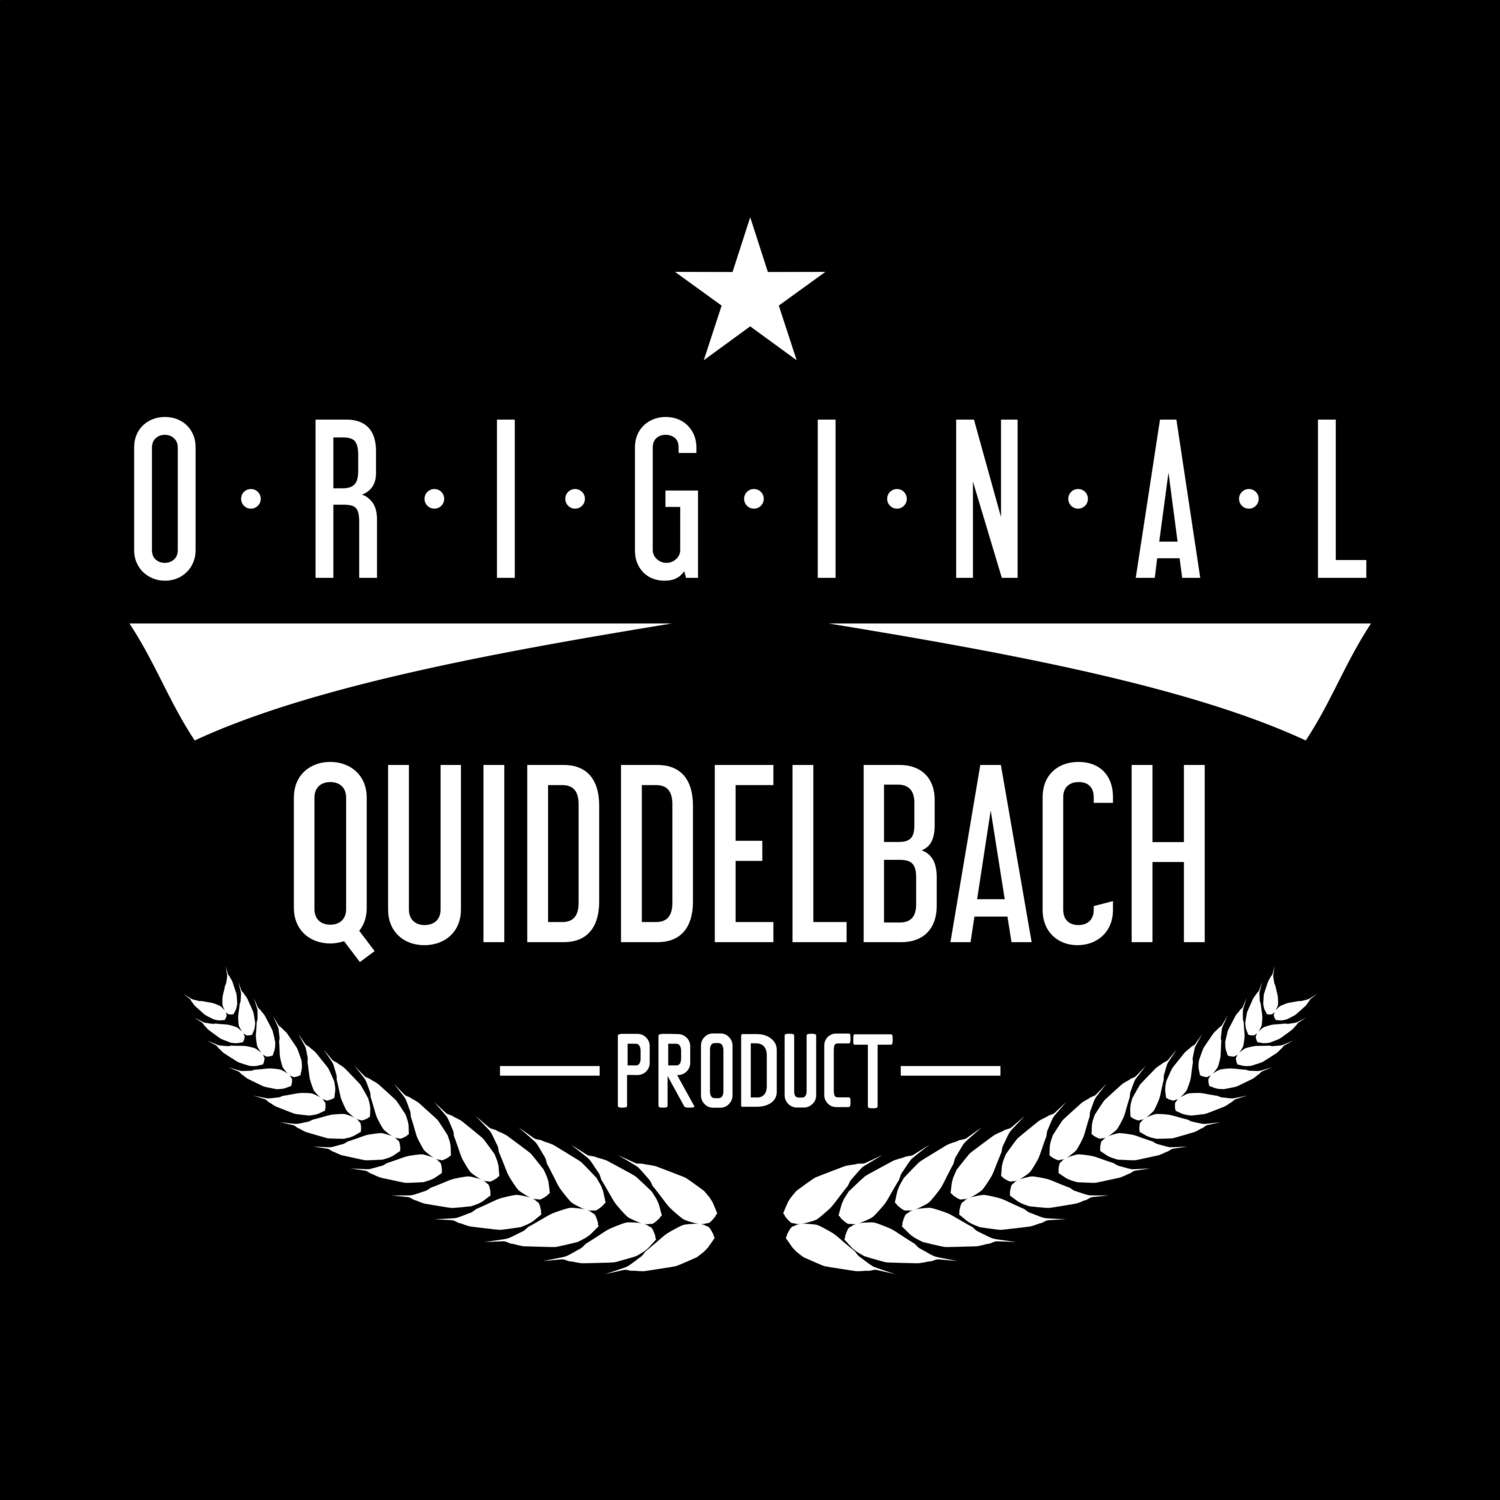 Quiddelbach T-Shirt »Original Product«